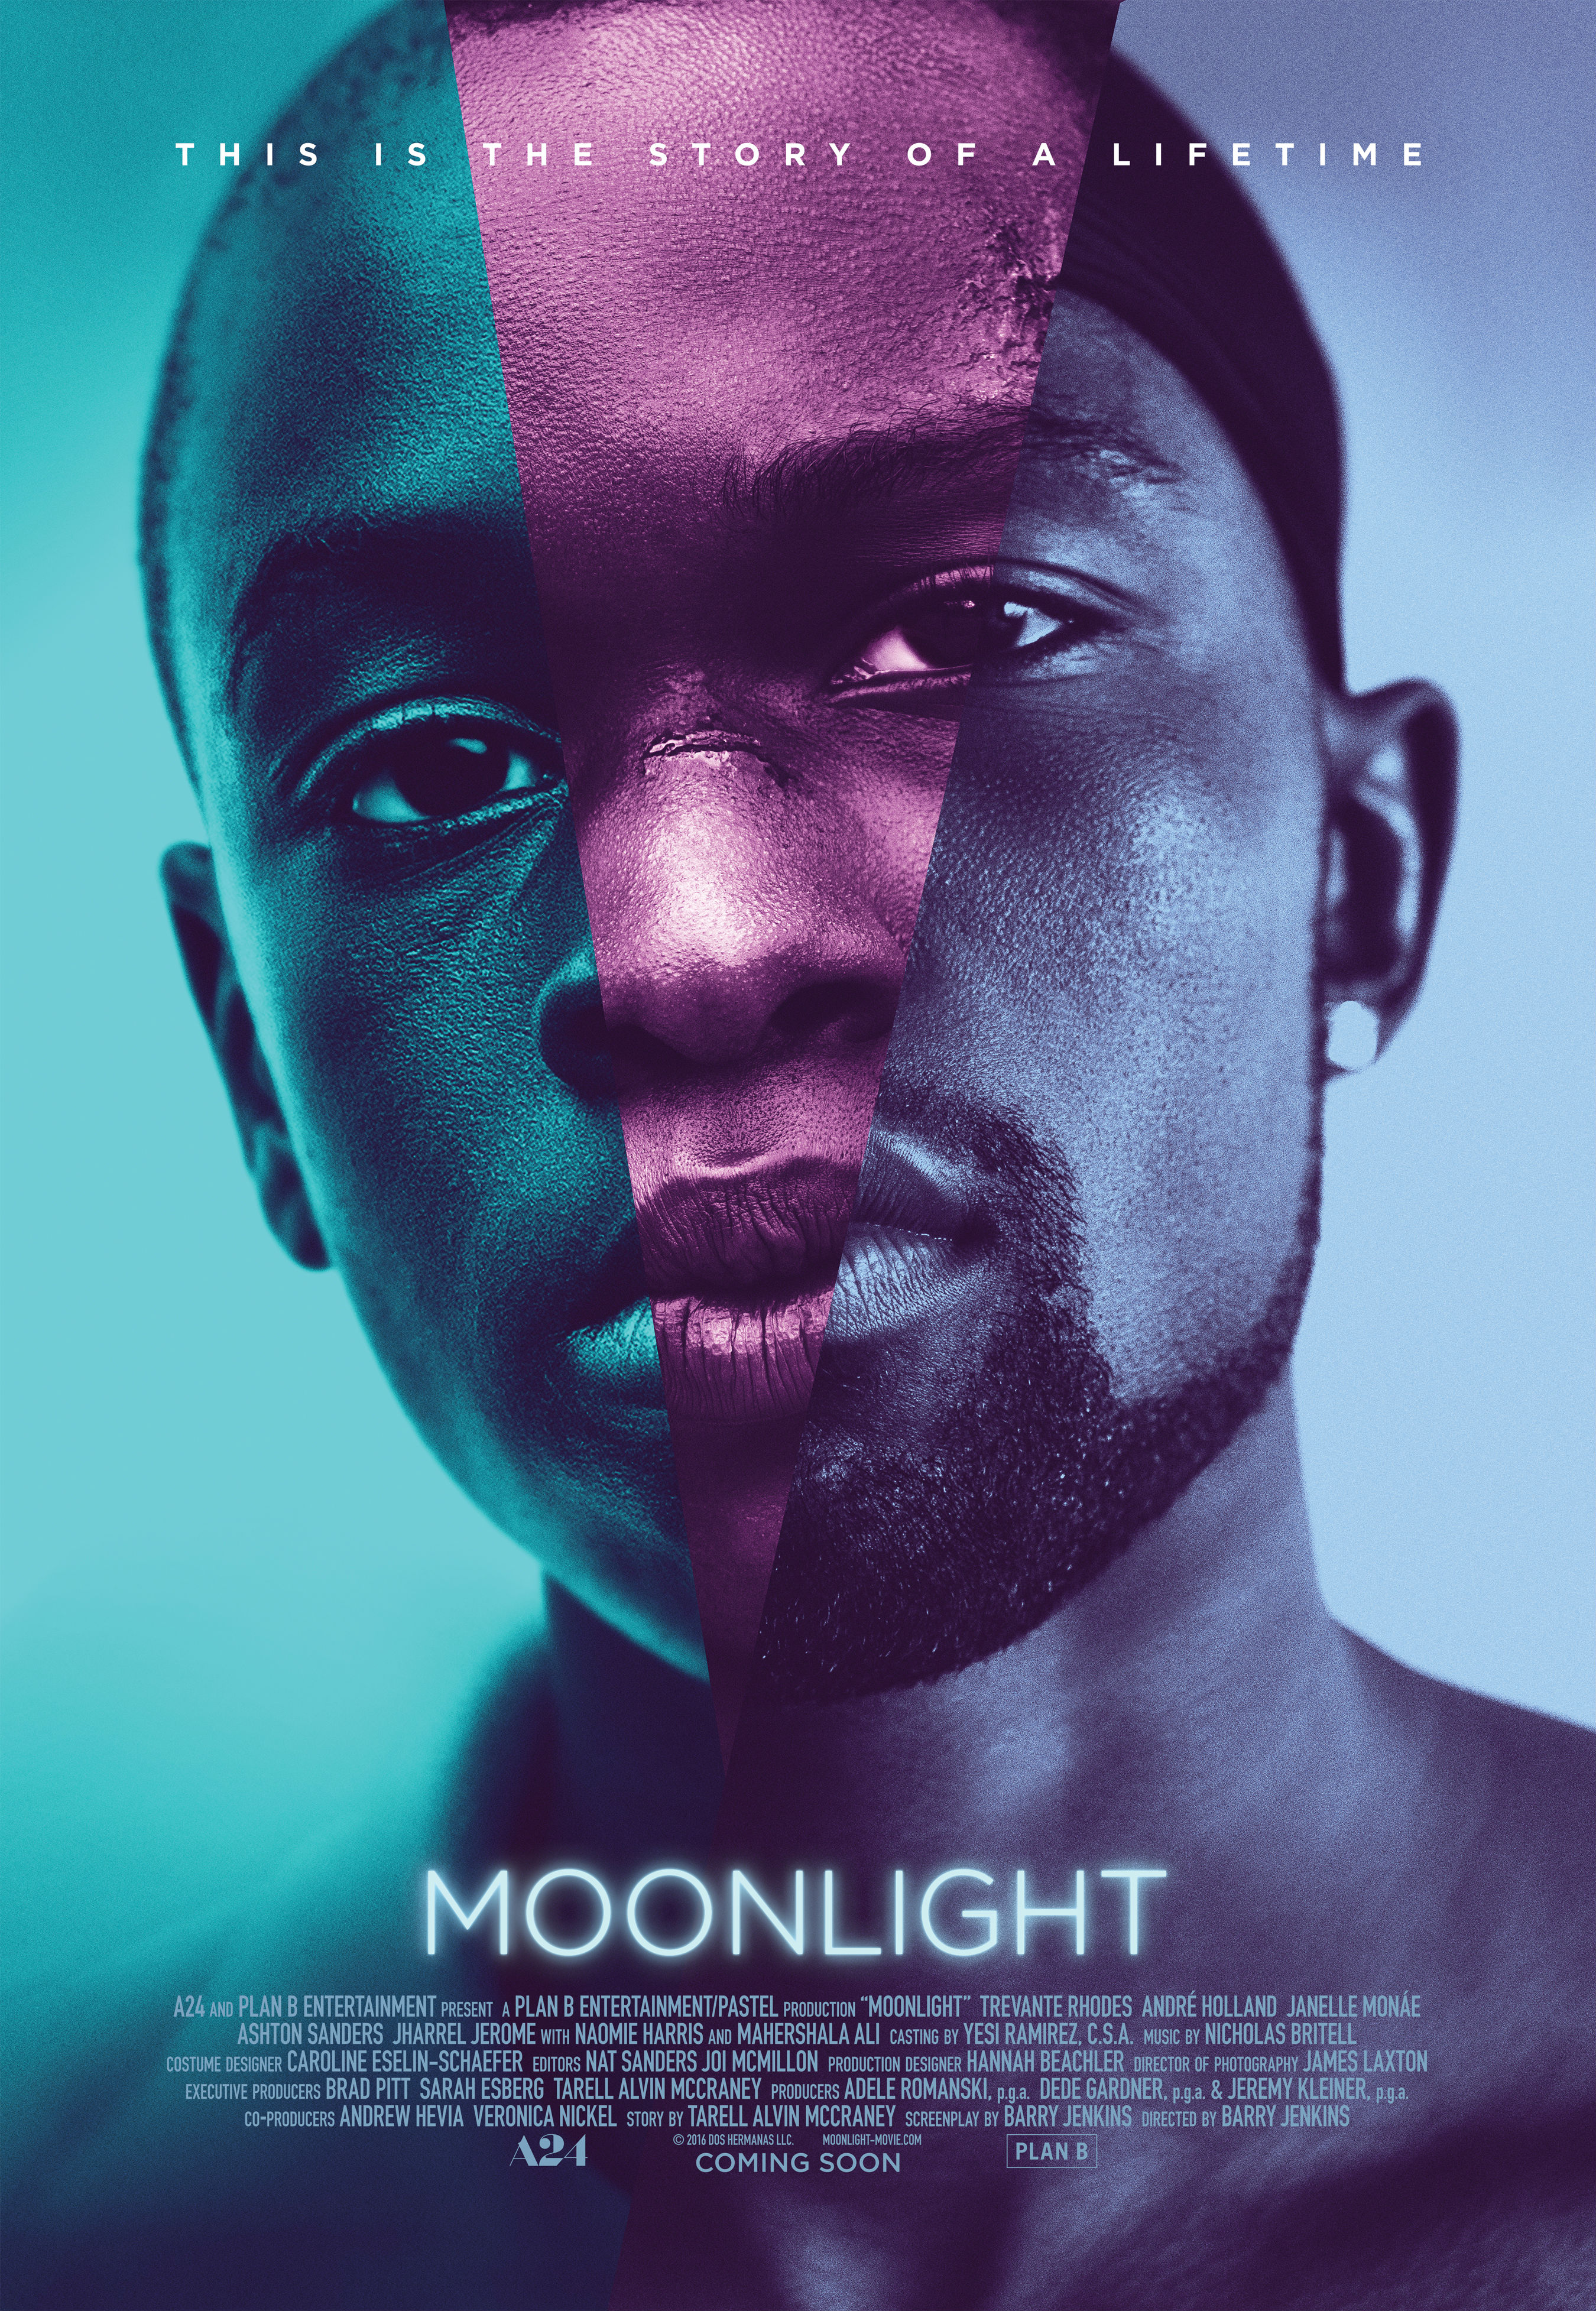 http://www.blackfilm.com/read/wp-content/uploads/2016/08/Moonlight-poster.jpg